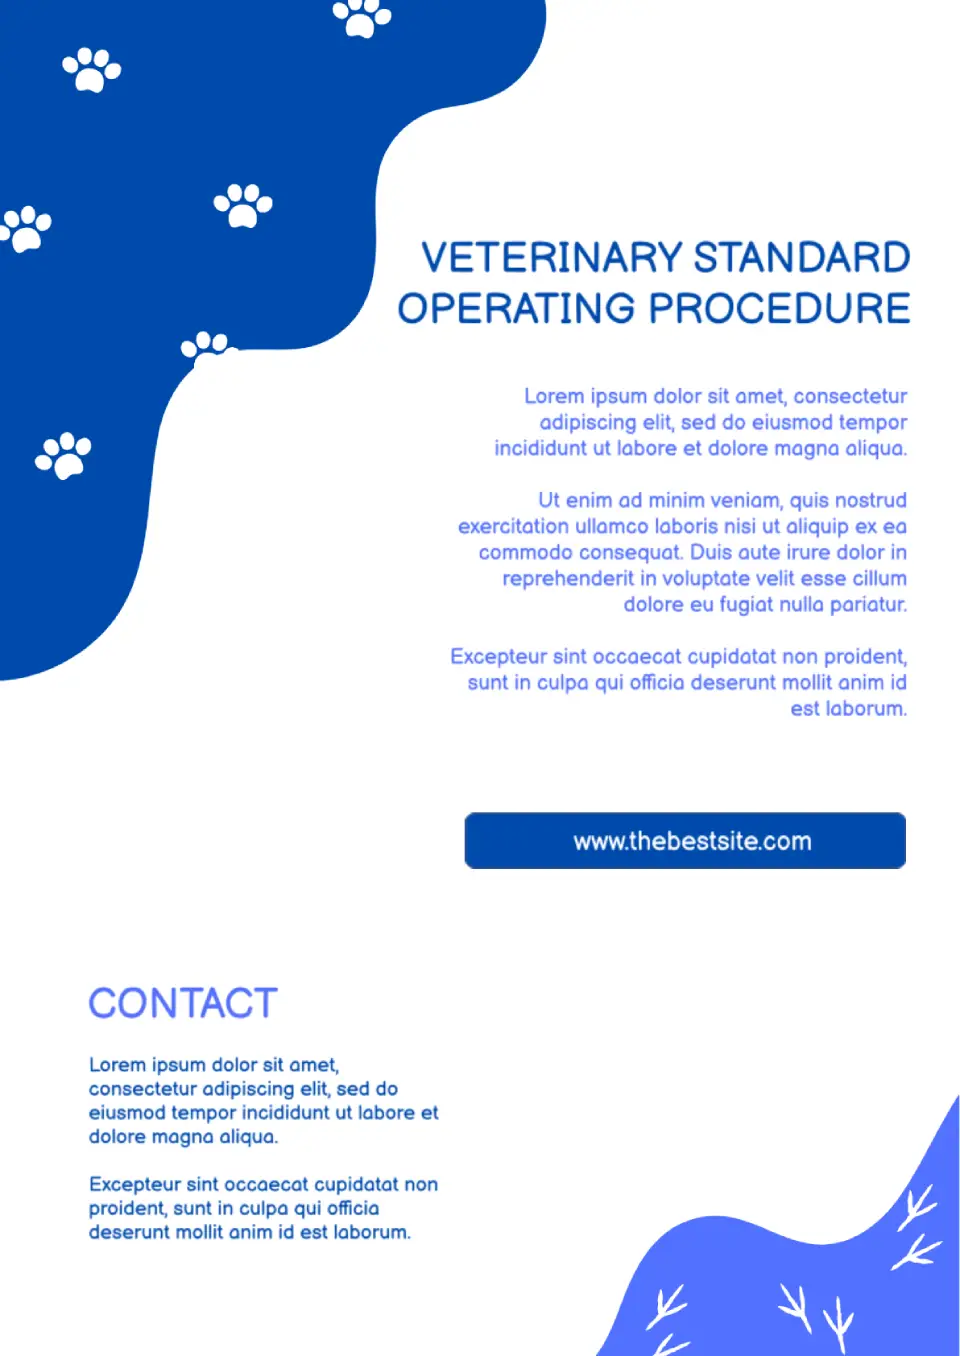 Veterinary Standard Operating Procedure Template for Google Docs